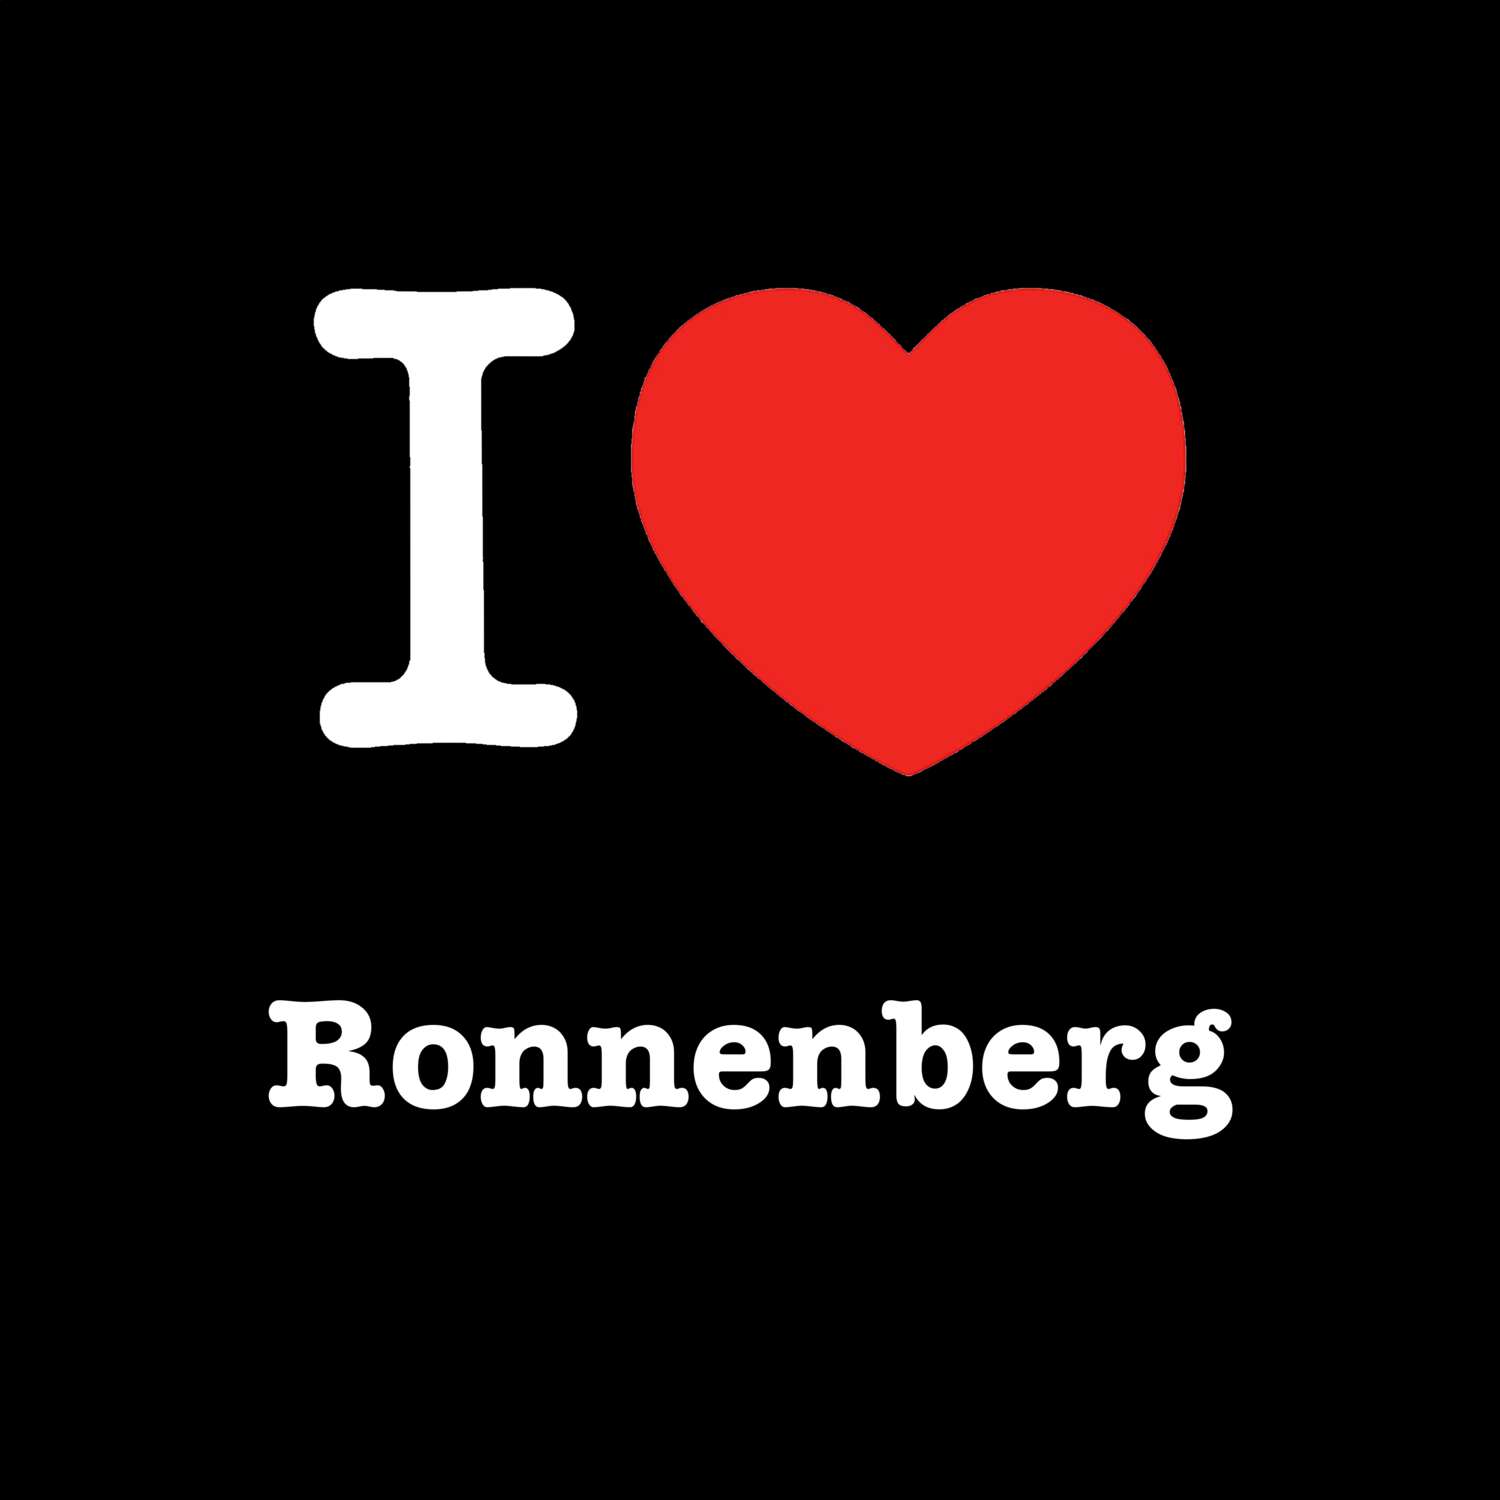 Ronnenberg T-Shirt »I love«